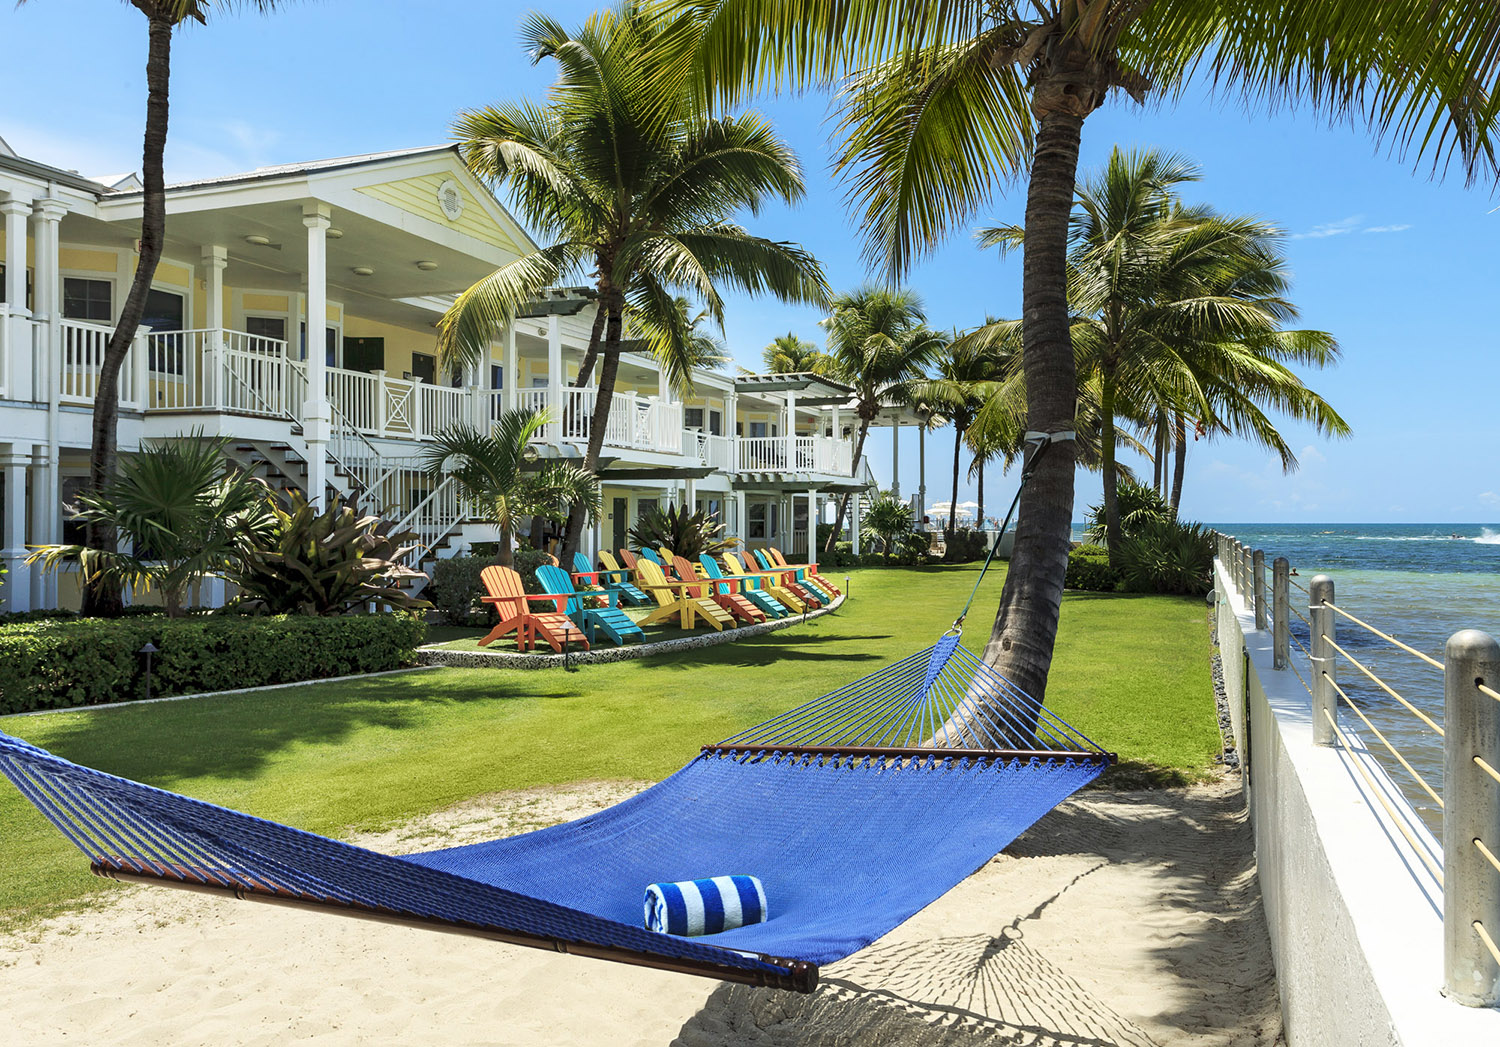 Southernmost Beach Resort, Key West